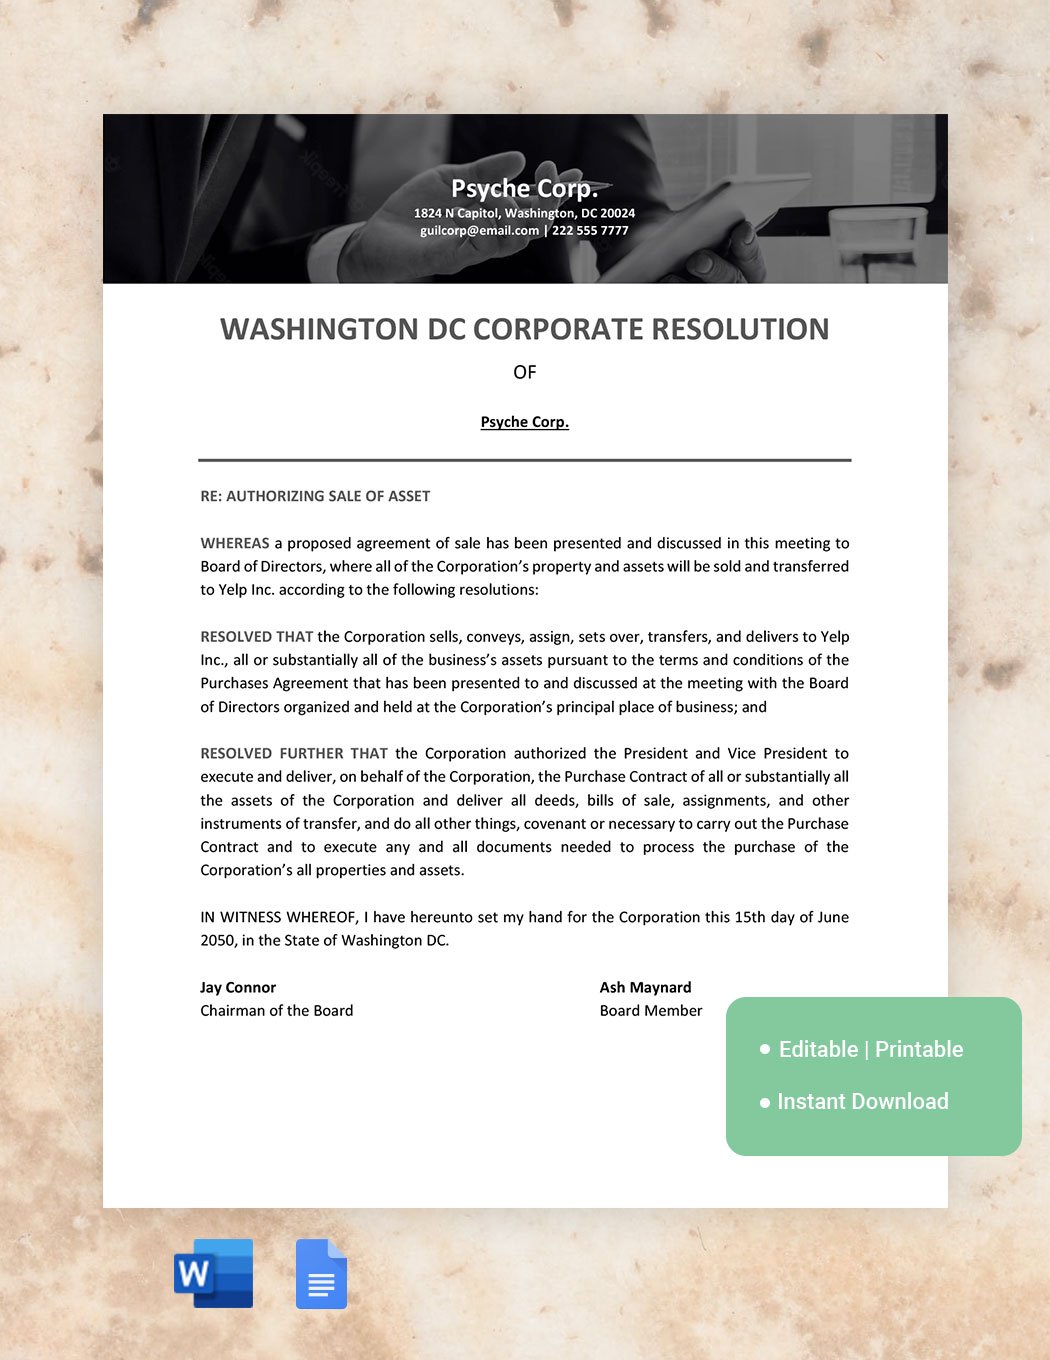  Washington DC Corporate Resolution Template